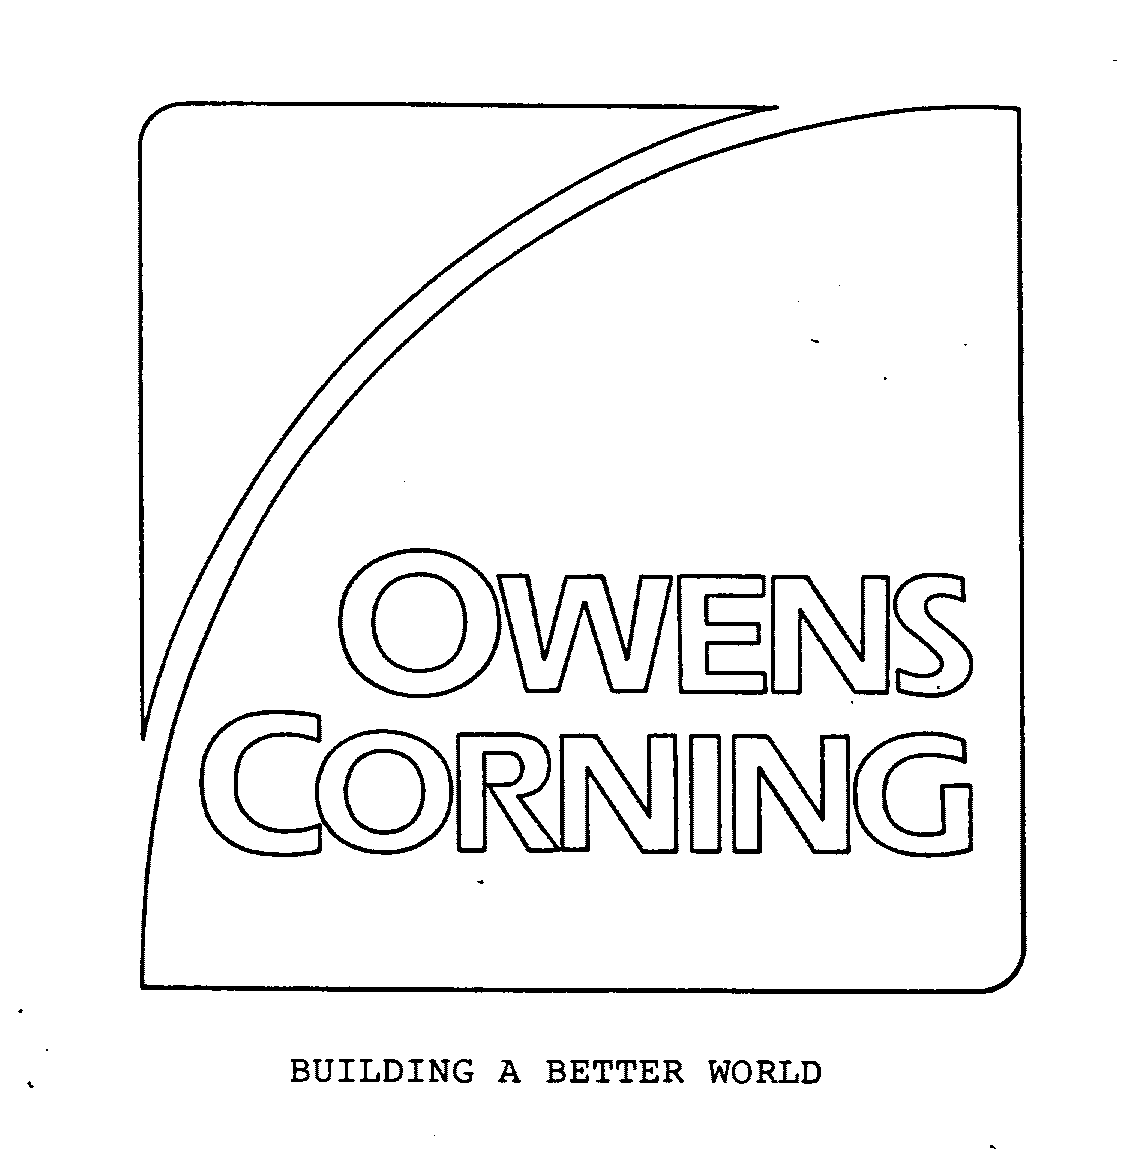  OWENS CORNING BUILDING A BETTER WORLD